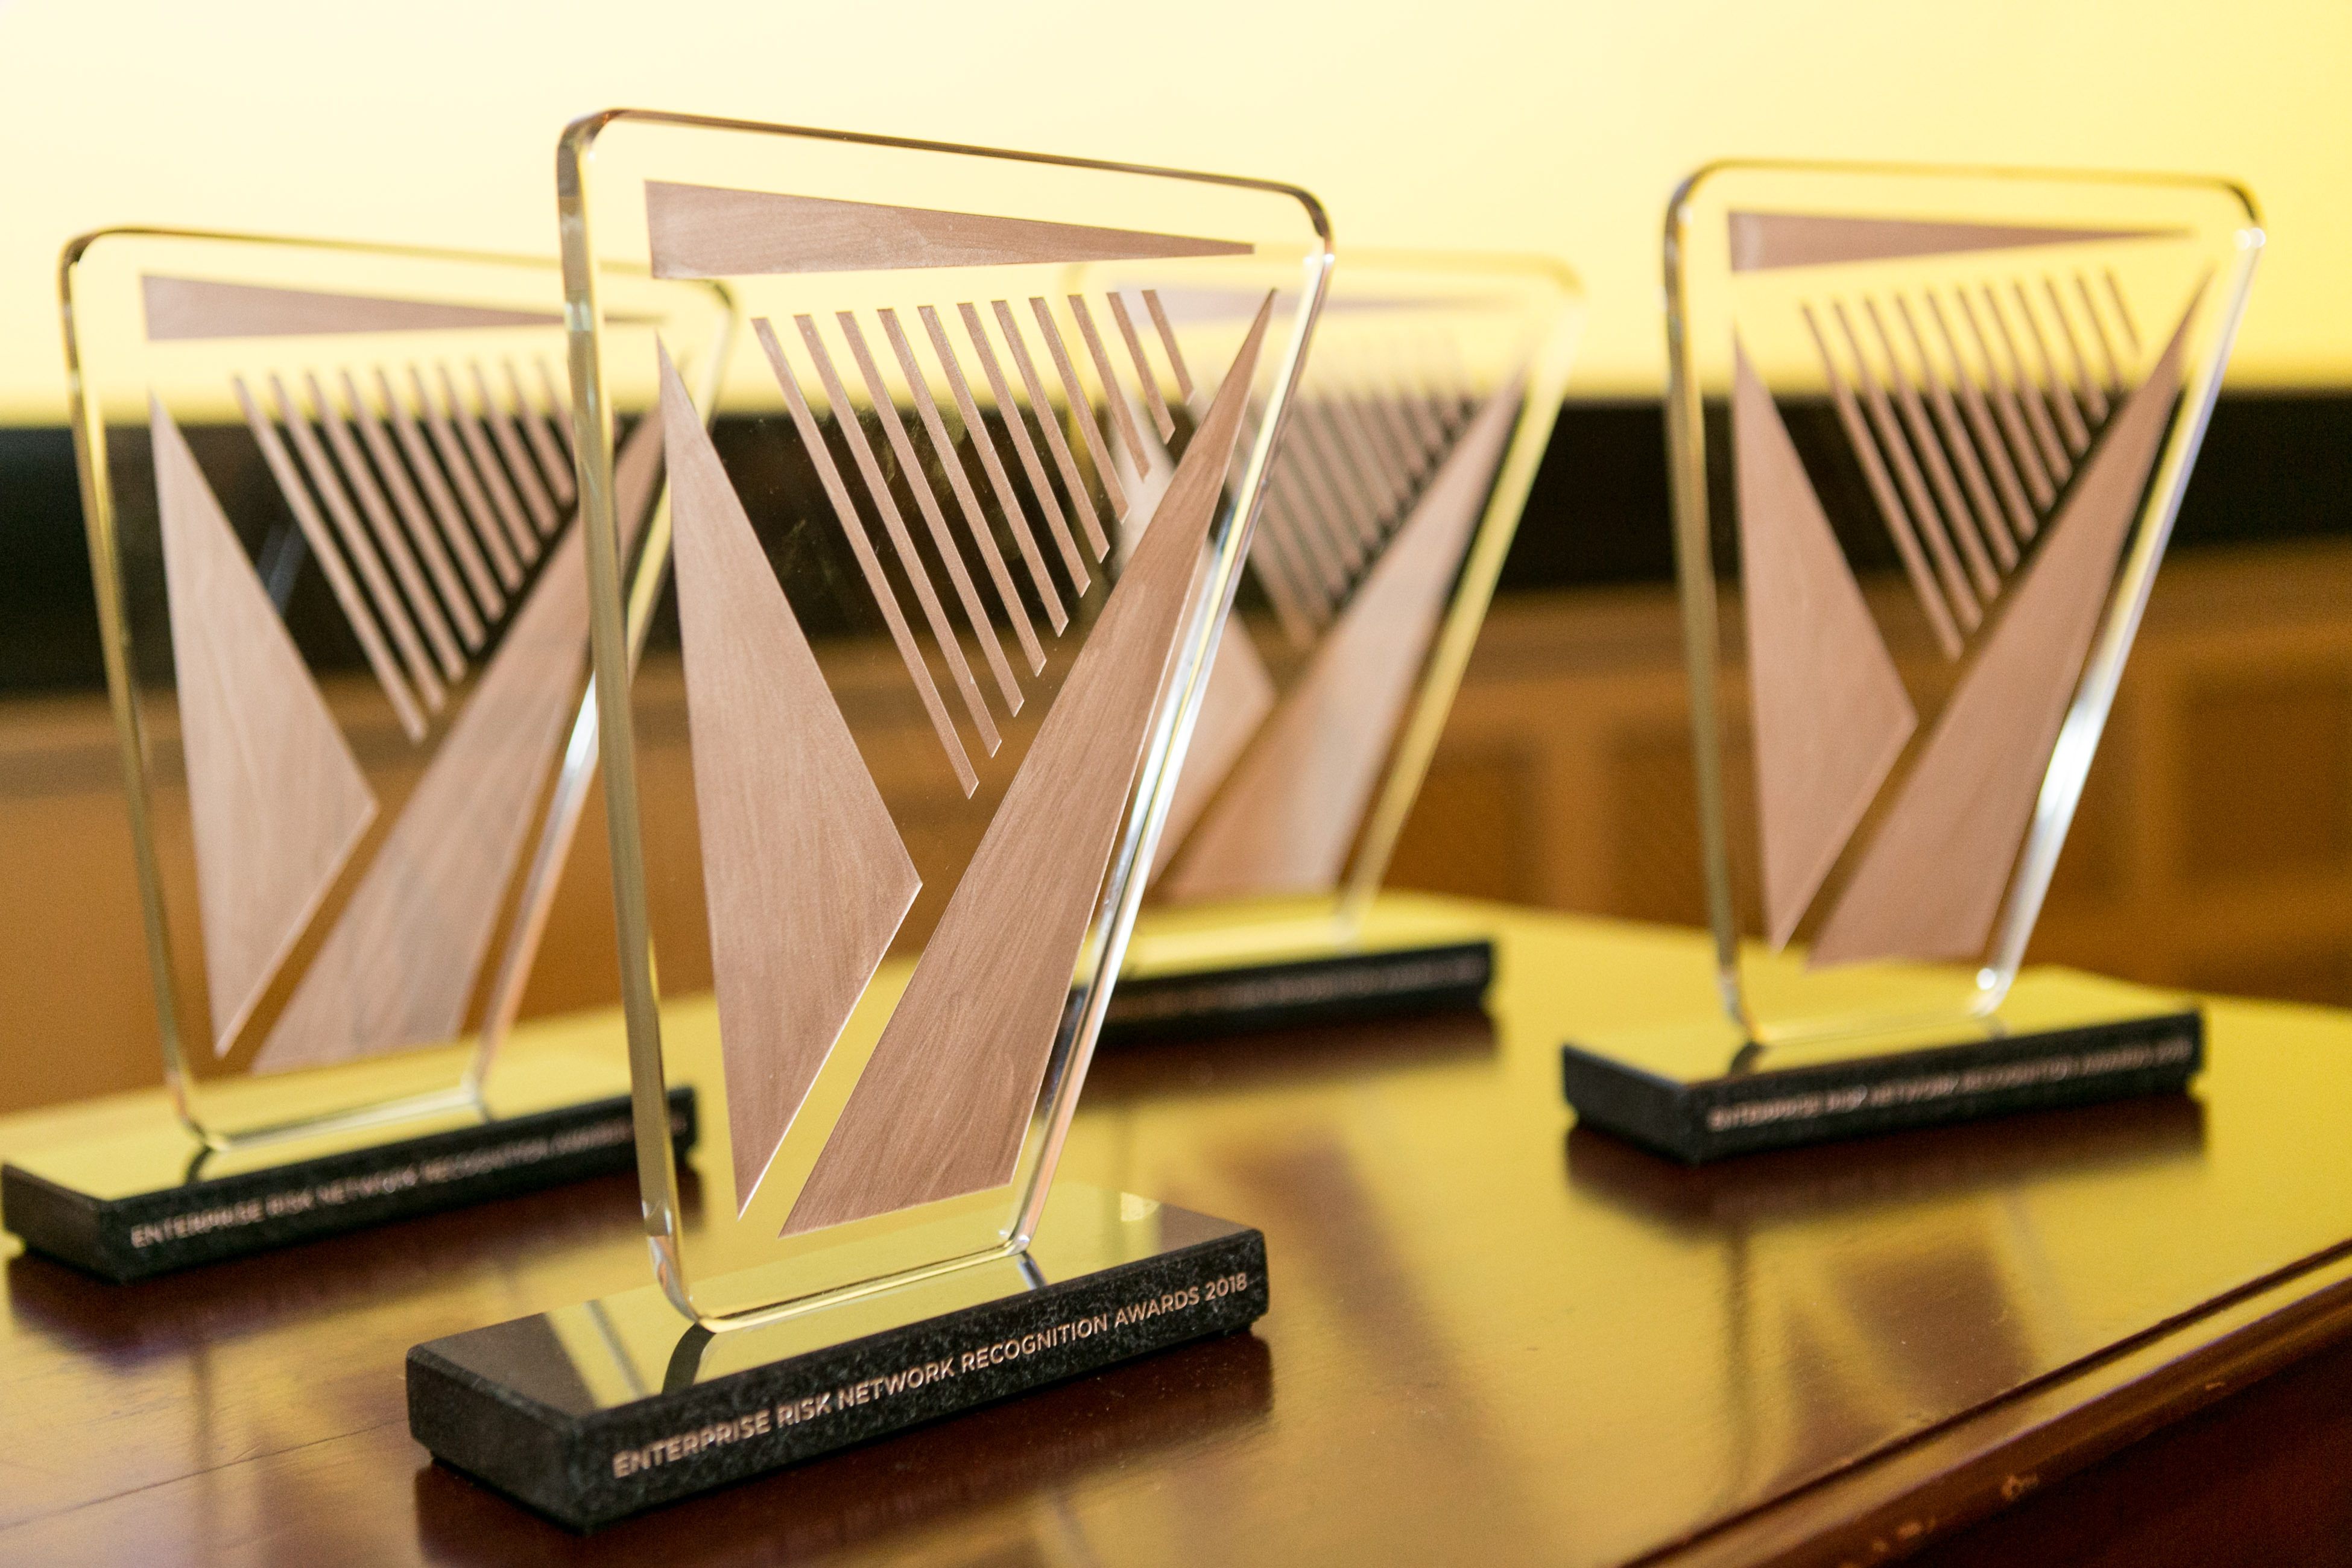 Enterprise Risk Network Recognition Awards 2023 - Open for entries